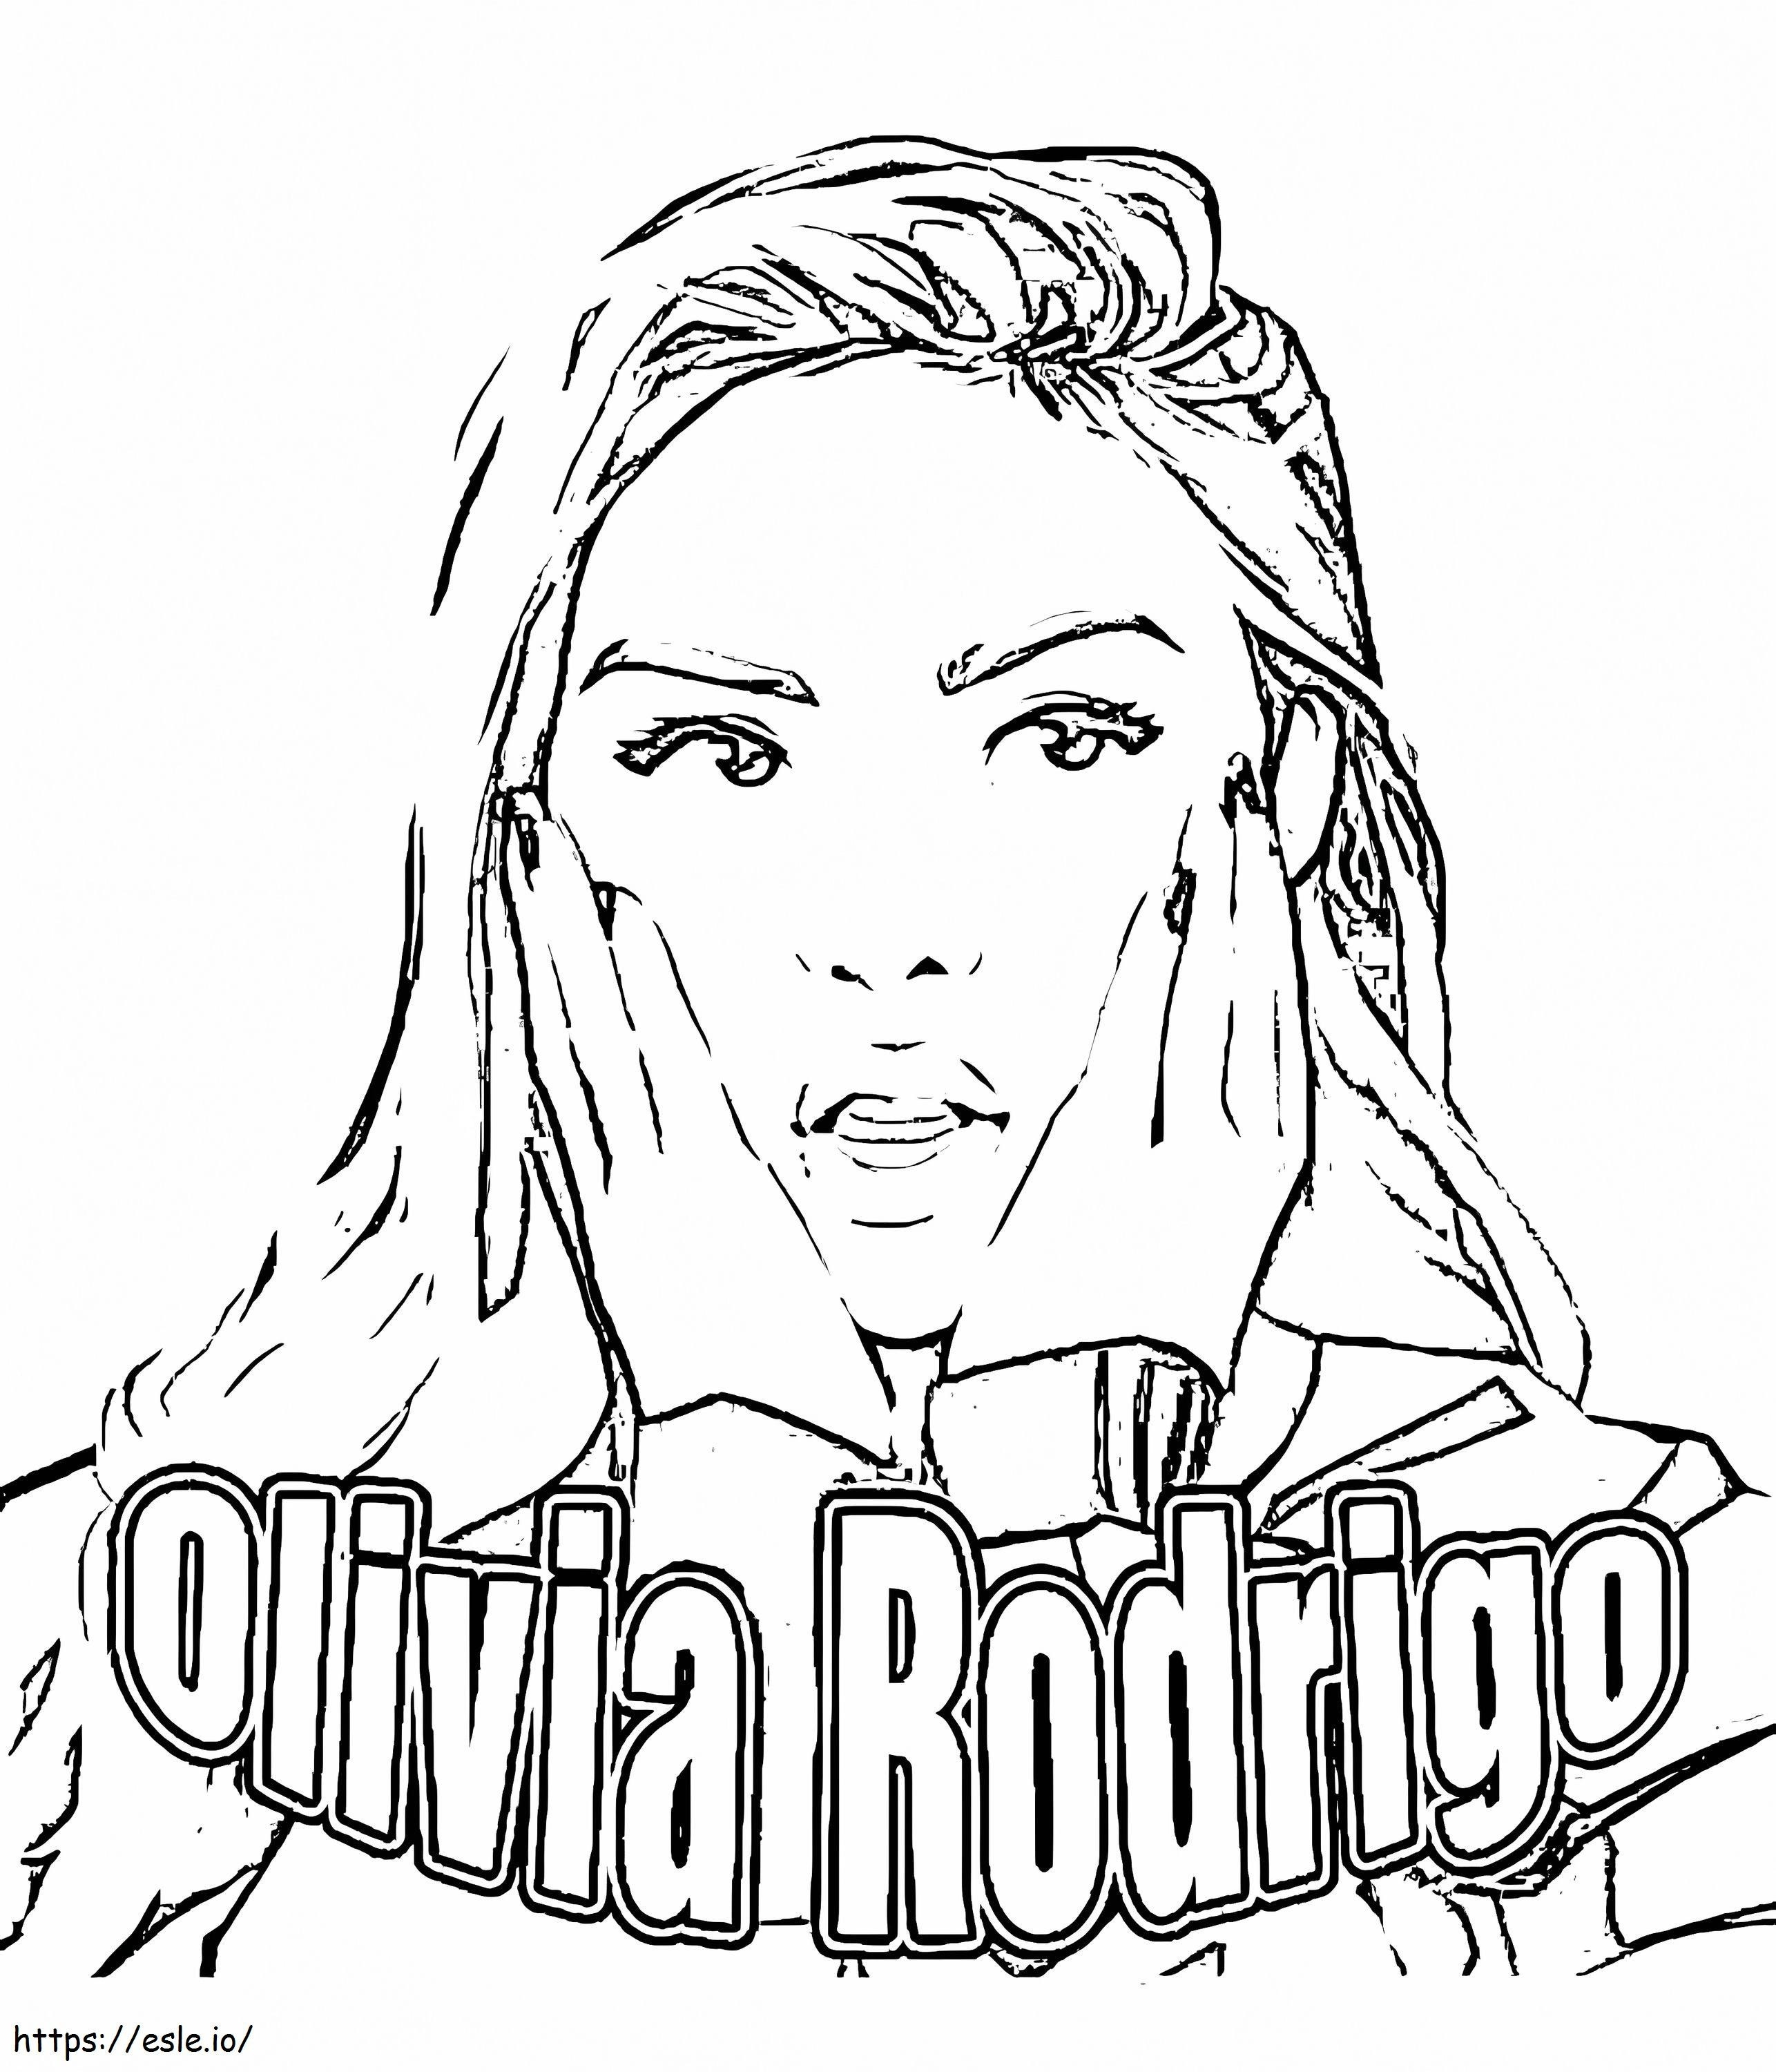 Olivia Rodrigo Imprimible para colorear